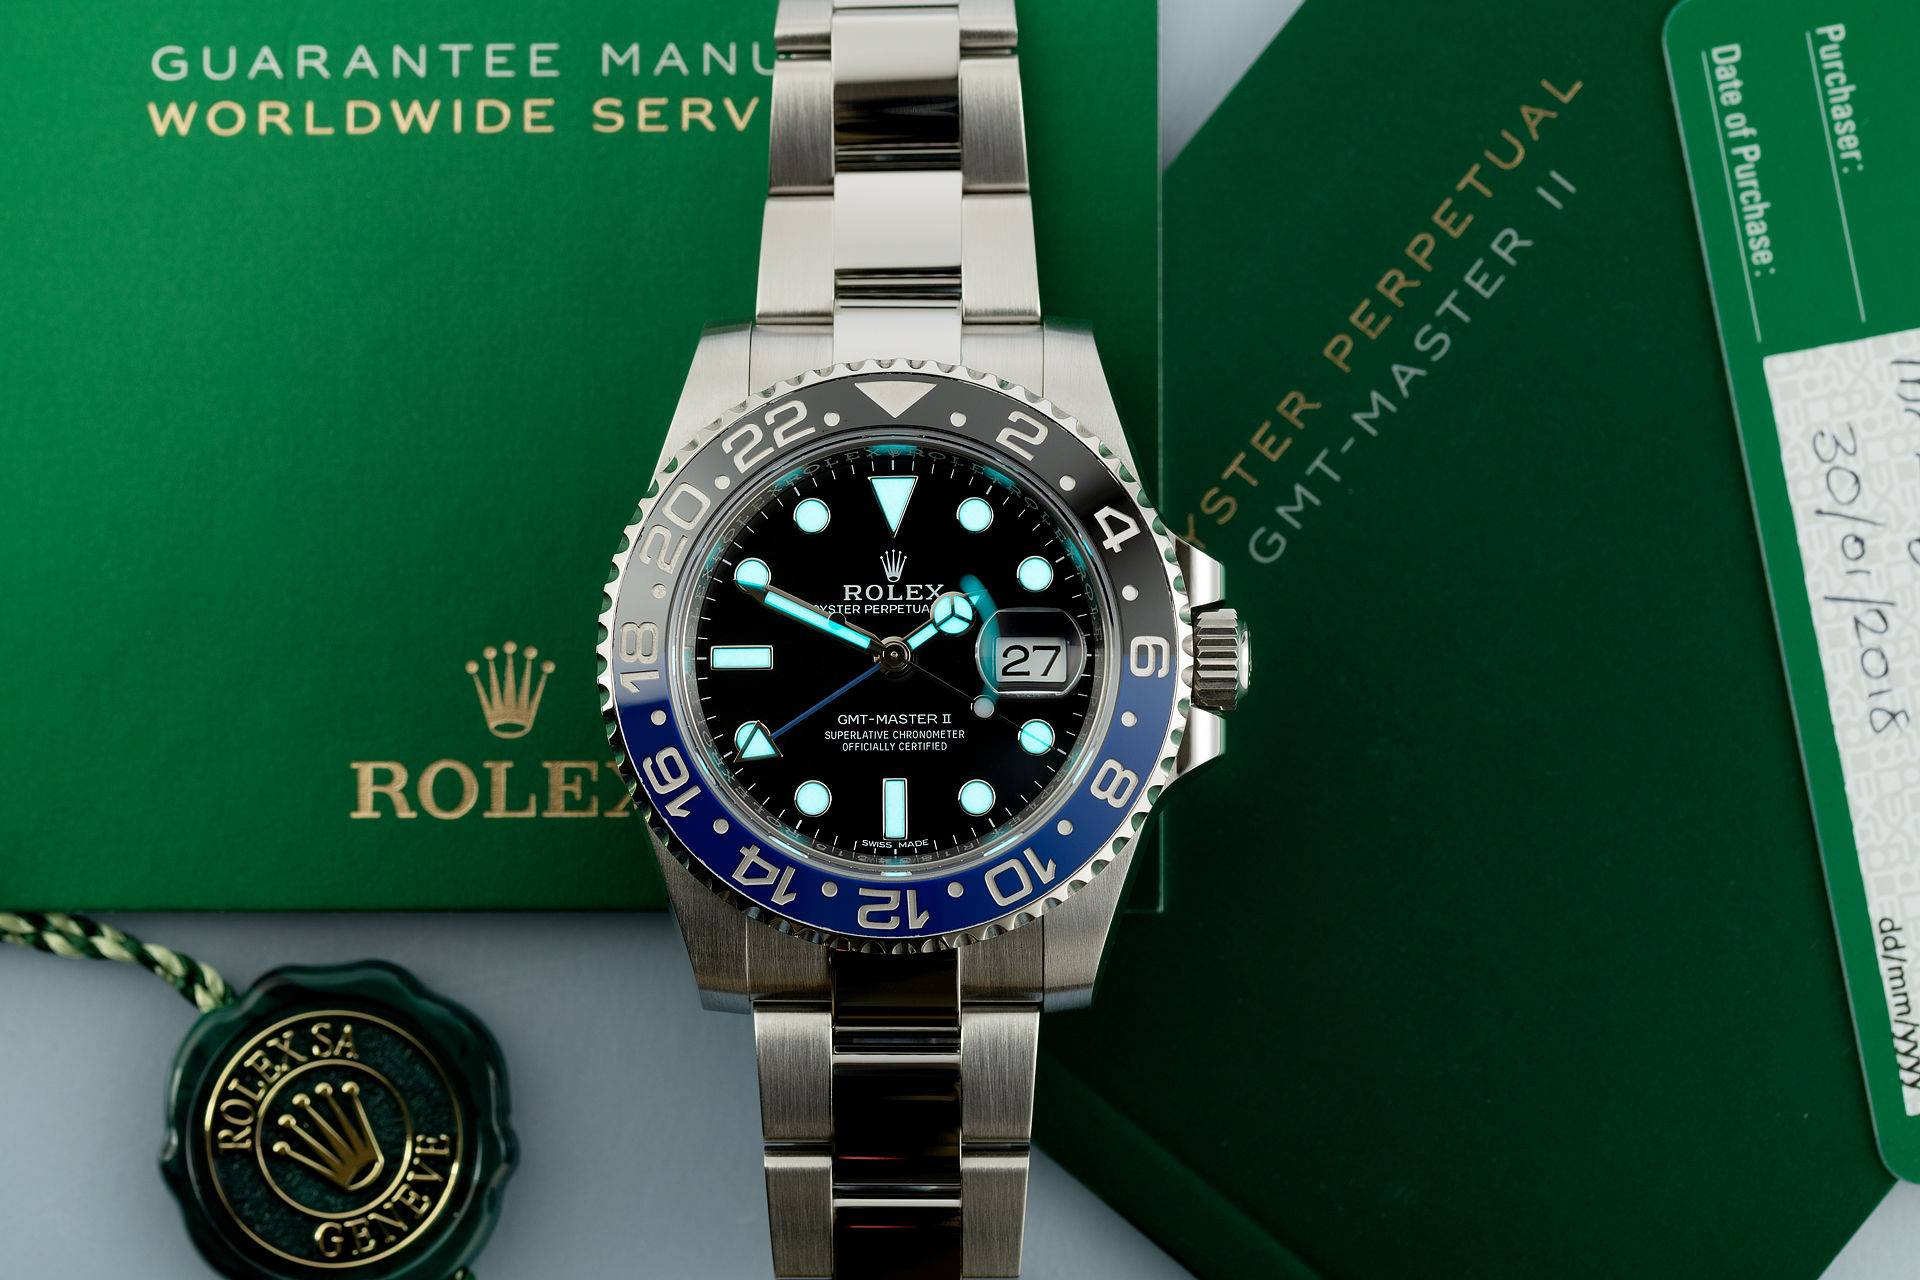 ref 116710BLNR | 5 Year Rolex Warranty  | Rolex GMT-Master II